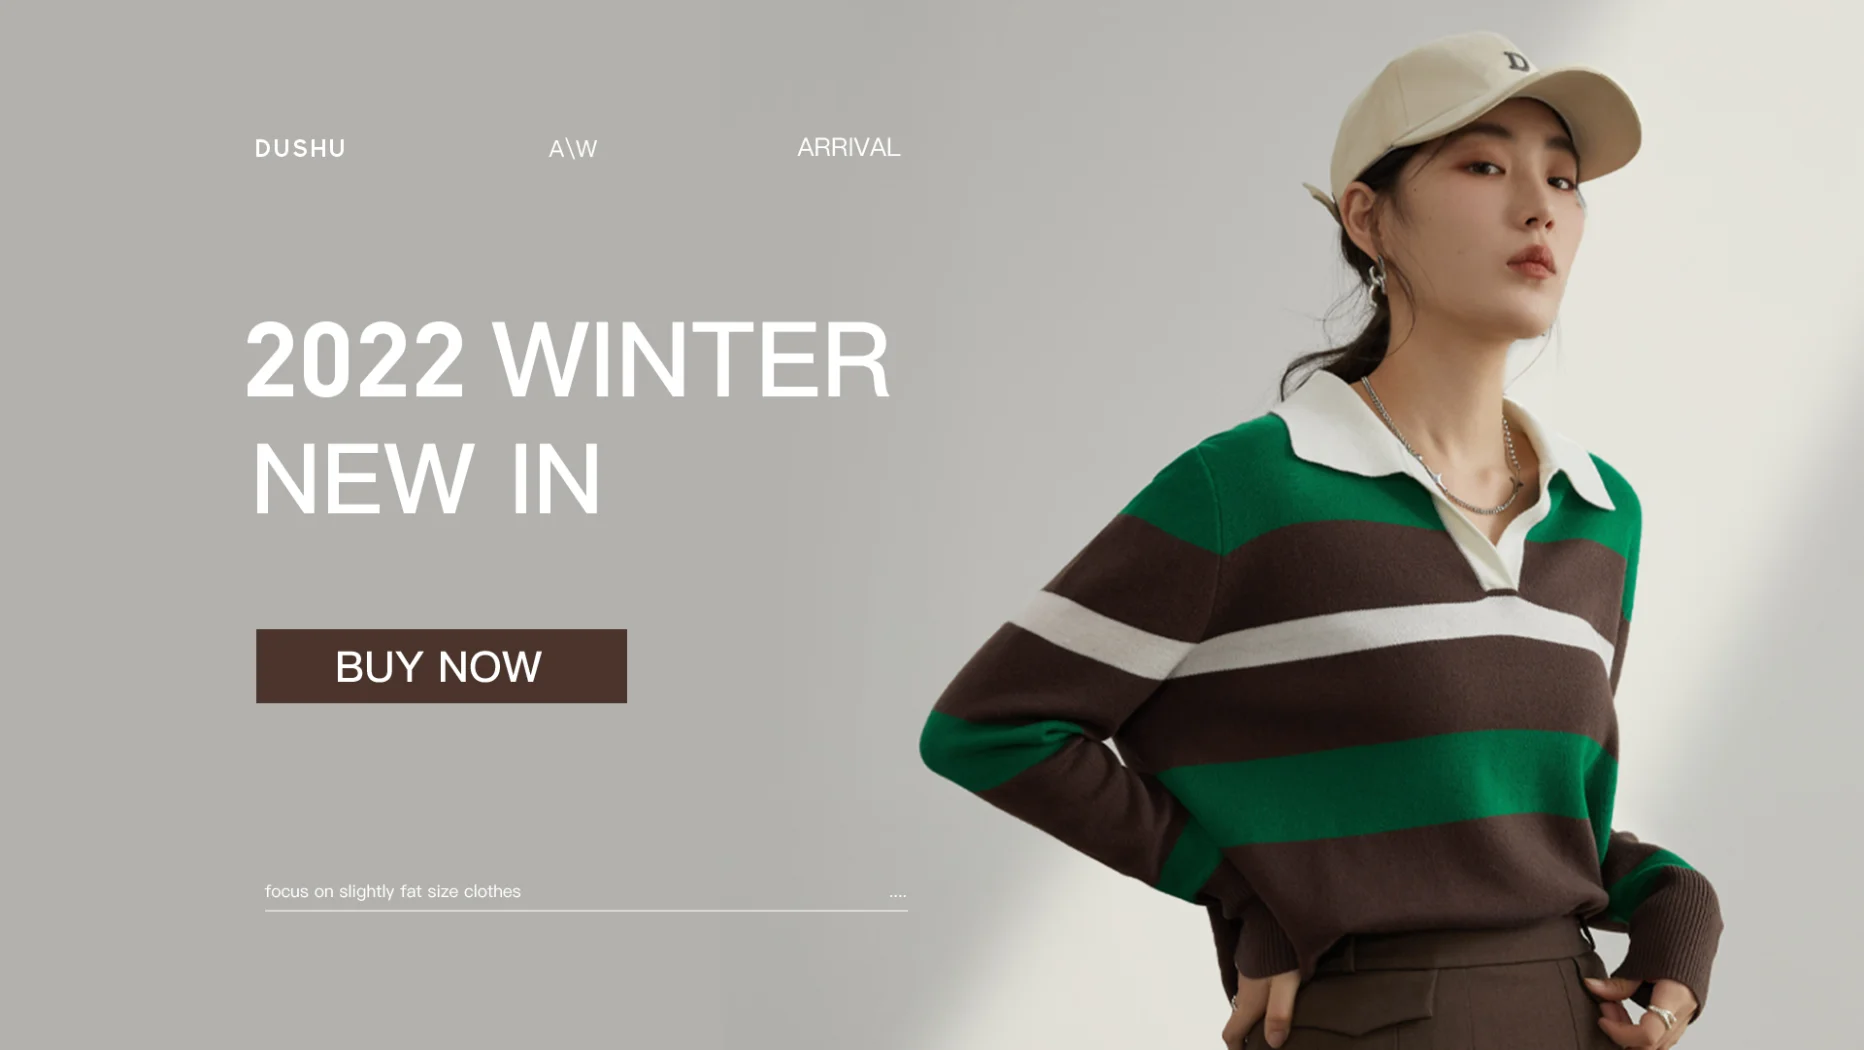 100% Wool Black Blue Green White Women Basic Sweater 2022 Winter New Full Sleeve Casual Solid Women Pullovers -Sbbf95f5a7a67408f8e9debbac9b992fbq